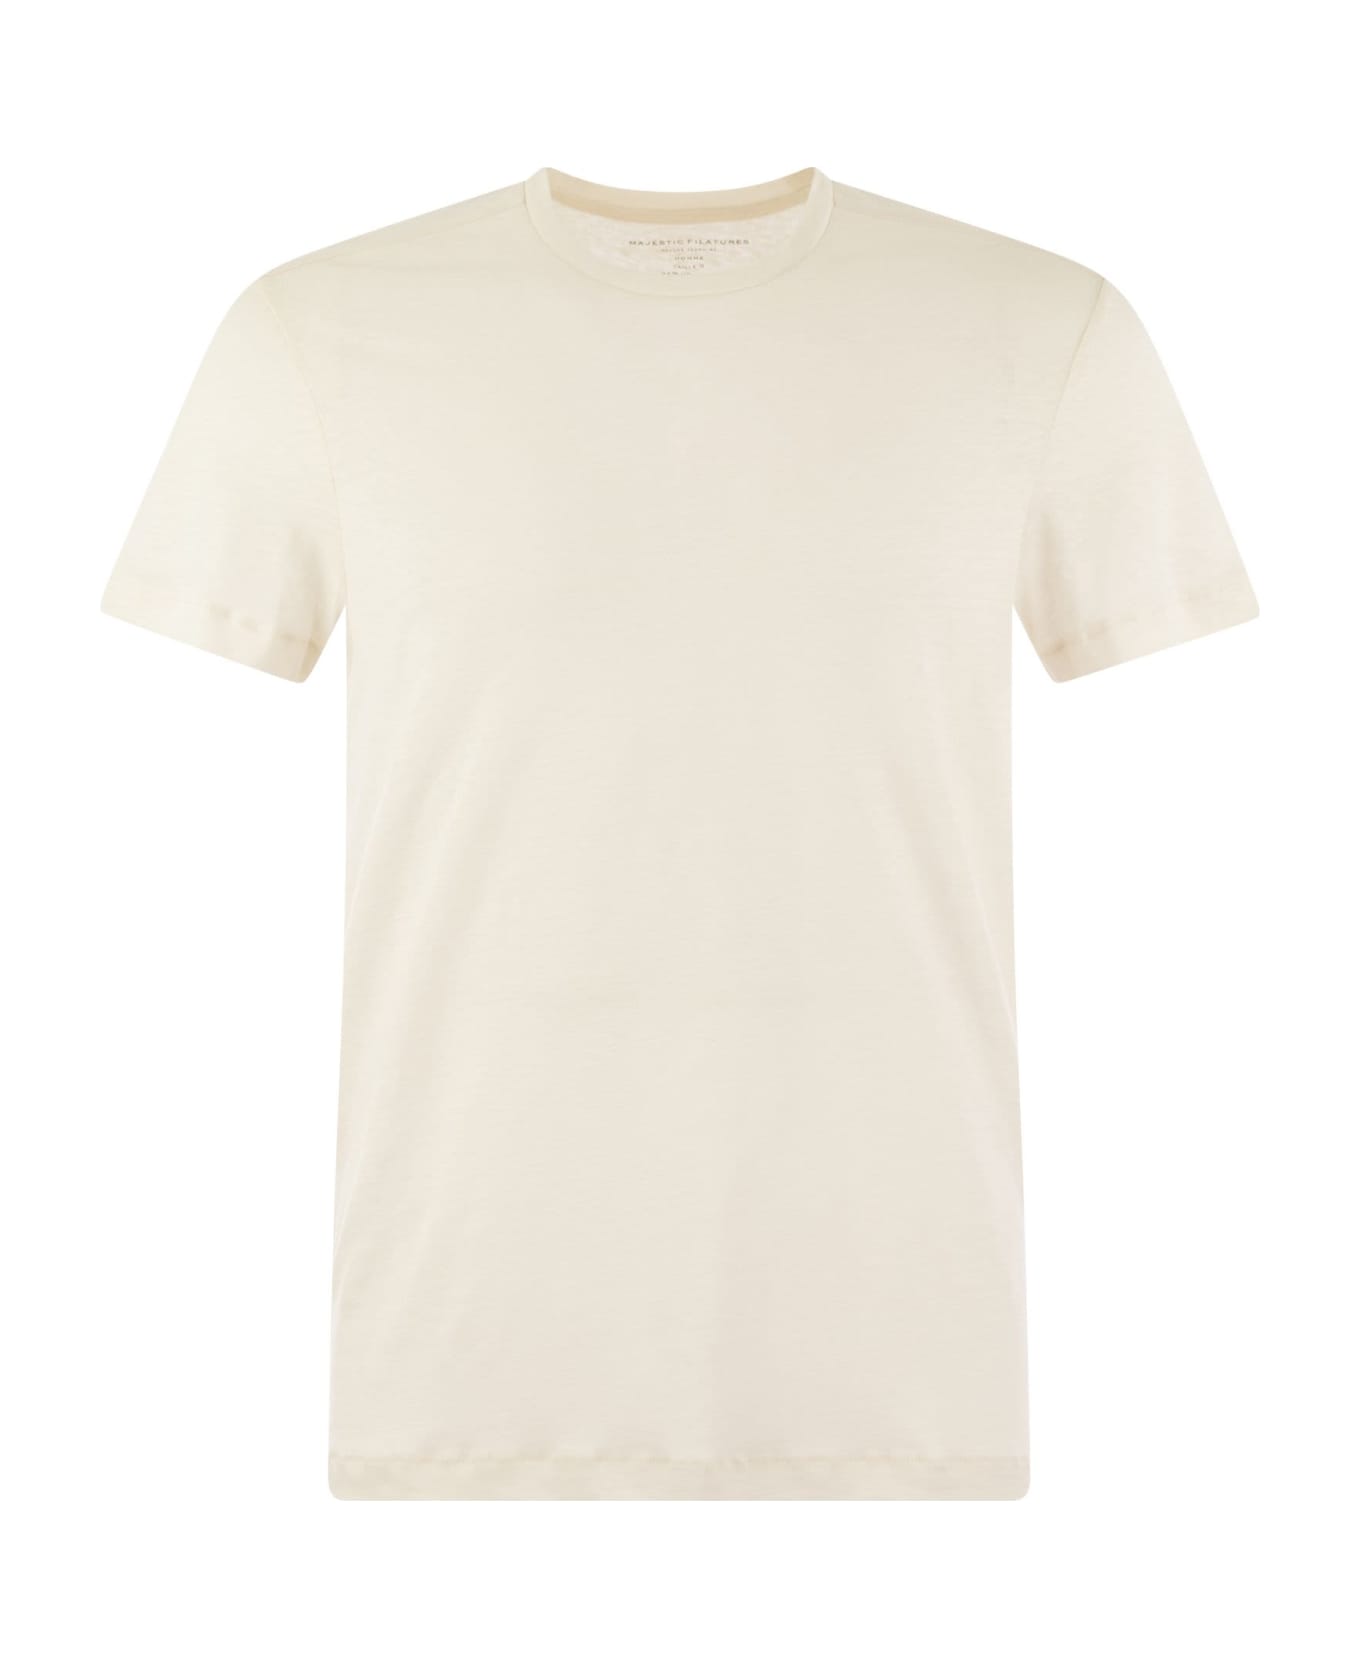 Majestic Filatures Linen Crew-neck T-shirt - Cream